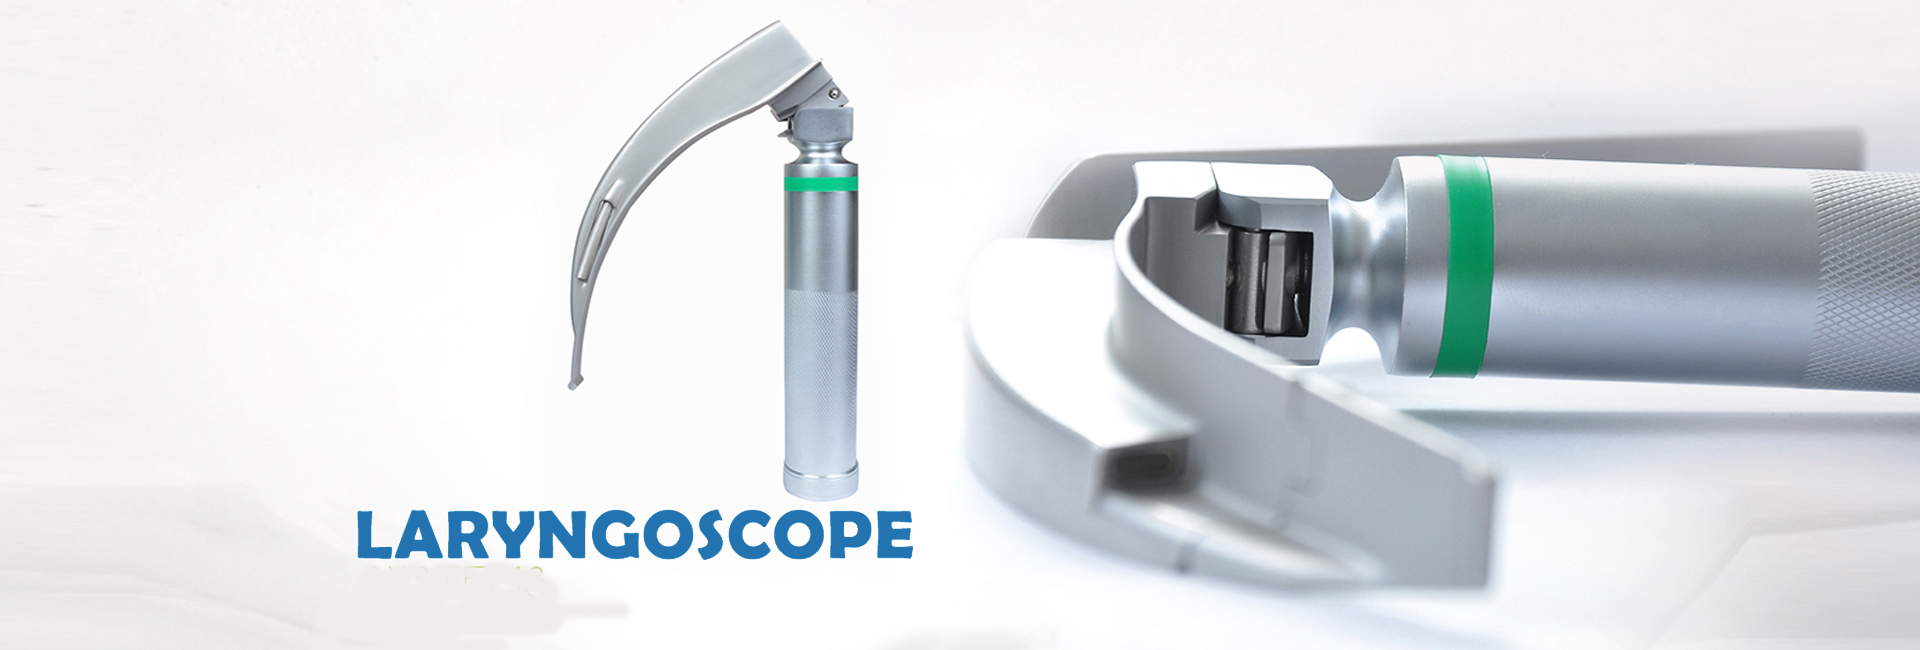 Larangoscope